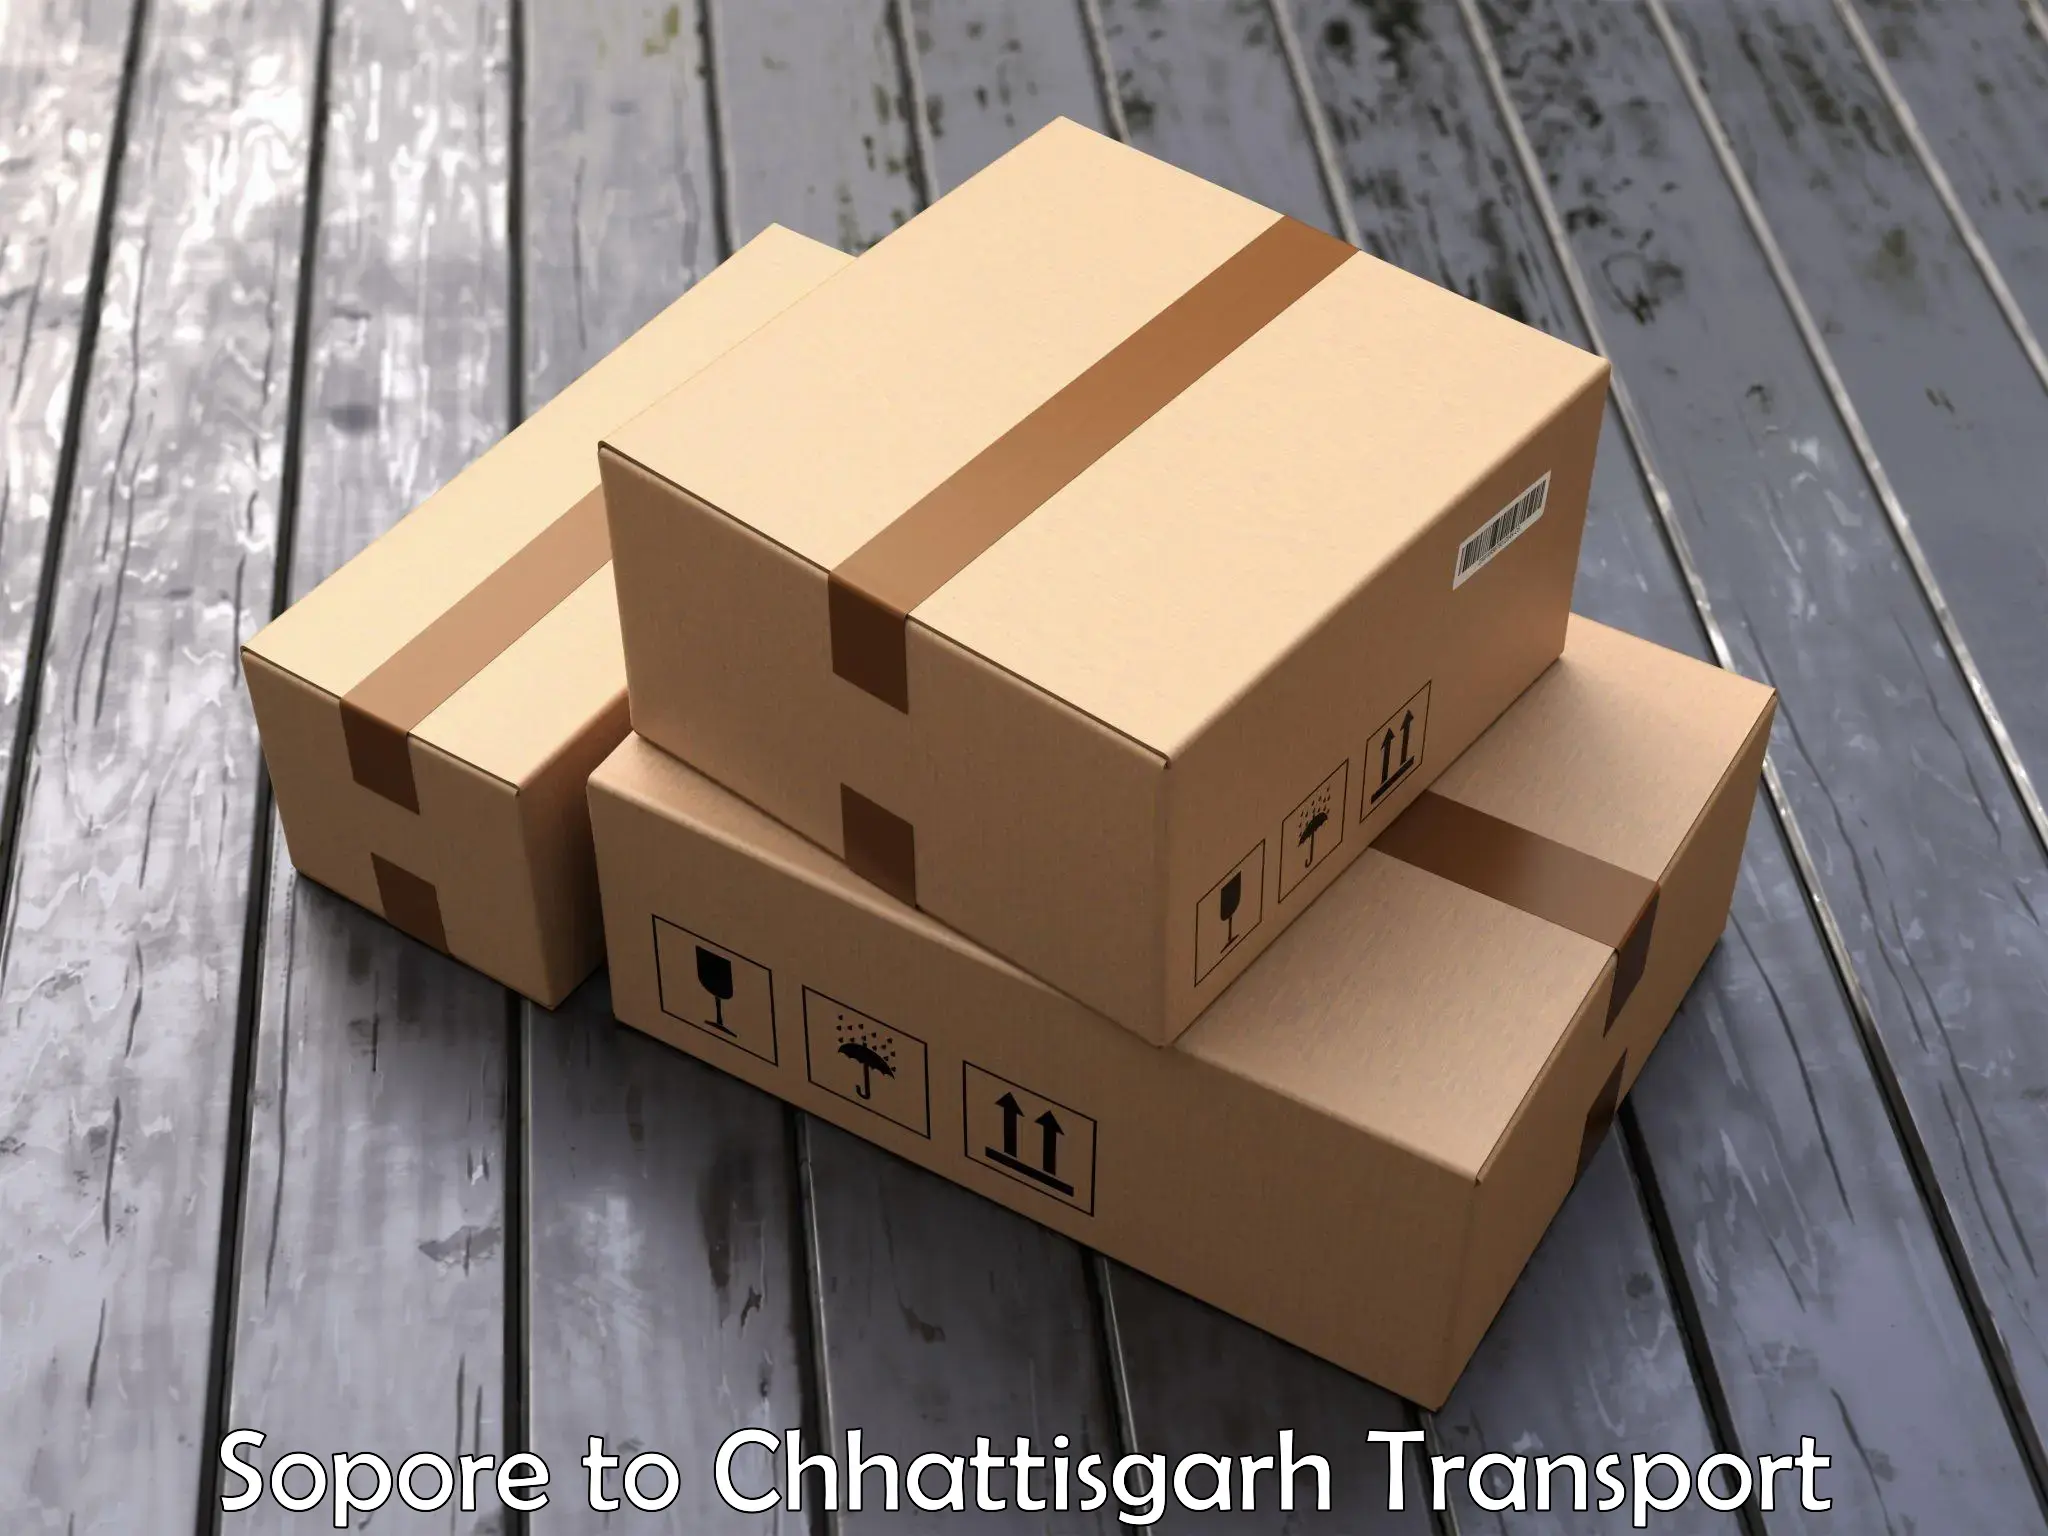 International cargo transportation services Sopore to Korea Chhattisgarh